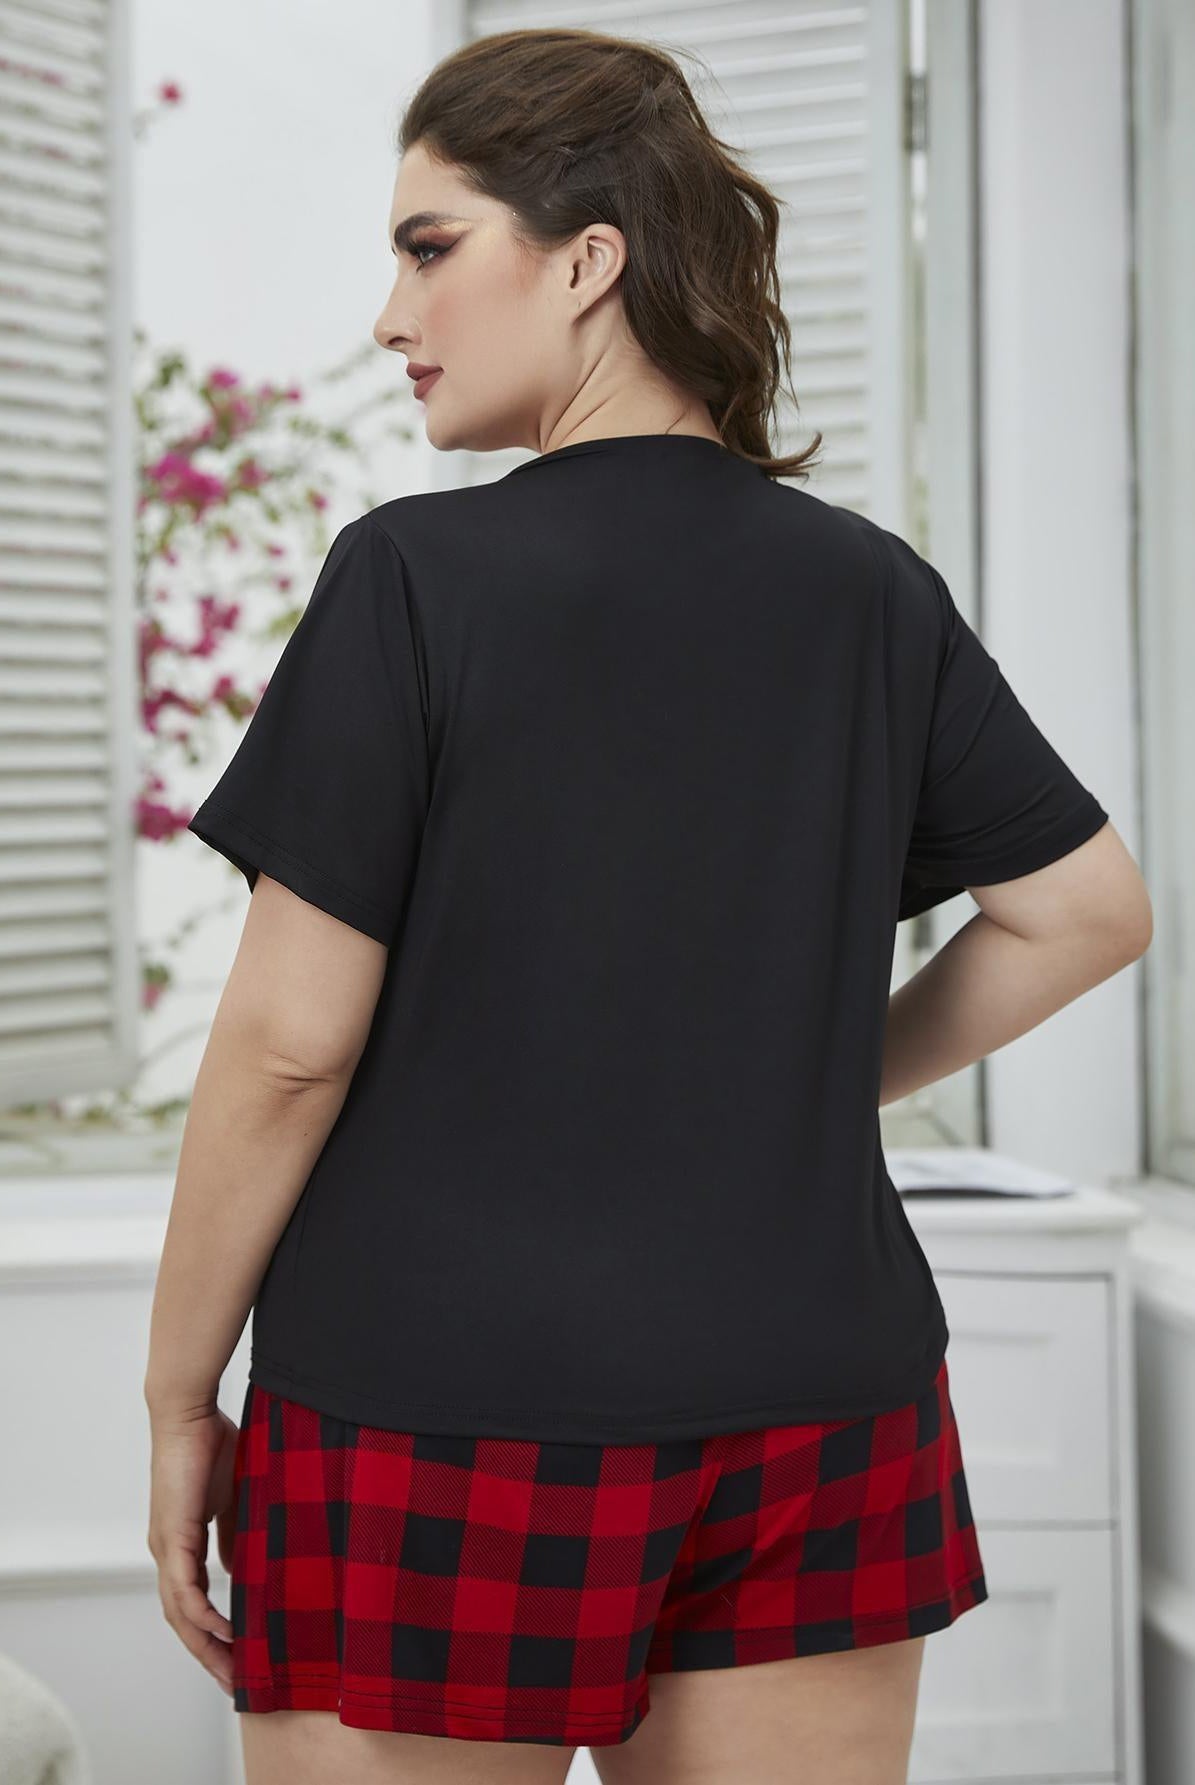 Women's Sleepwear/Loungewear Plus Size Round Neck Tee Shirt And Plaid Shorts Lounge Set